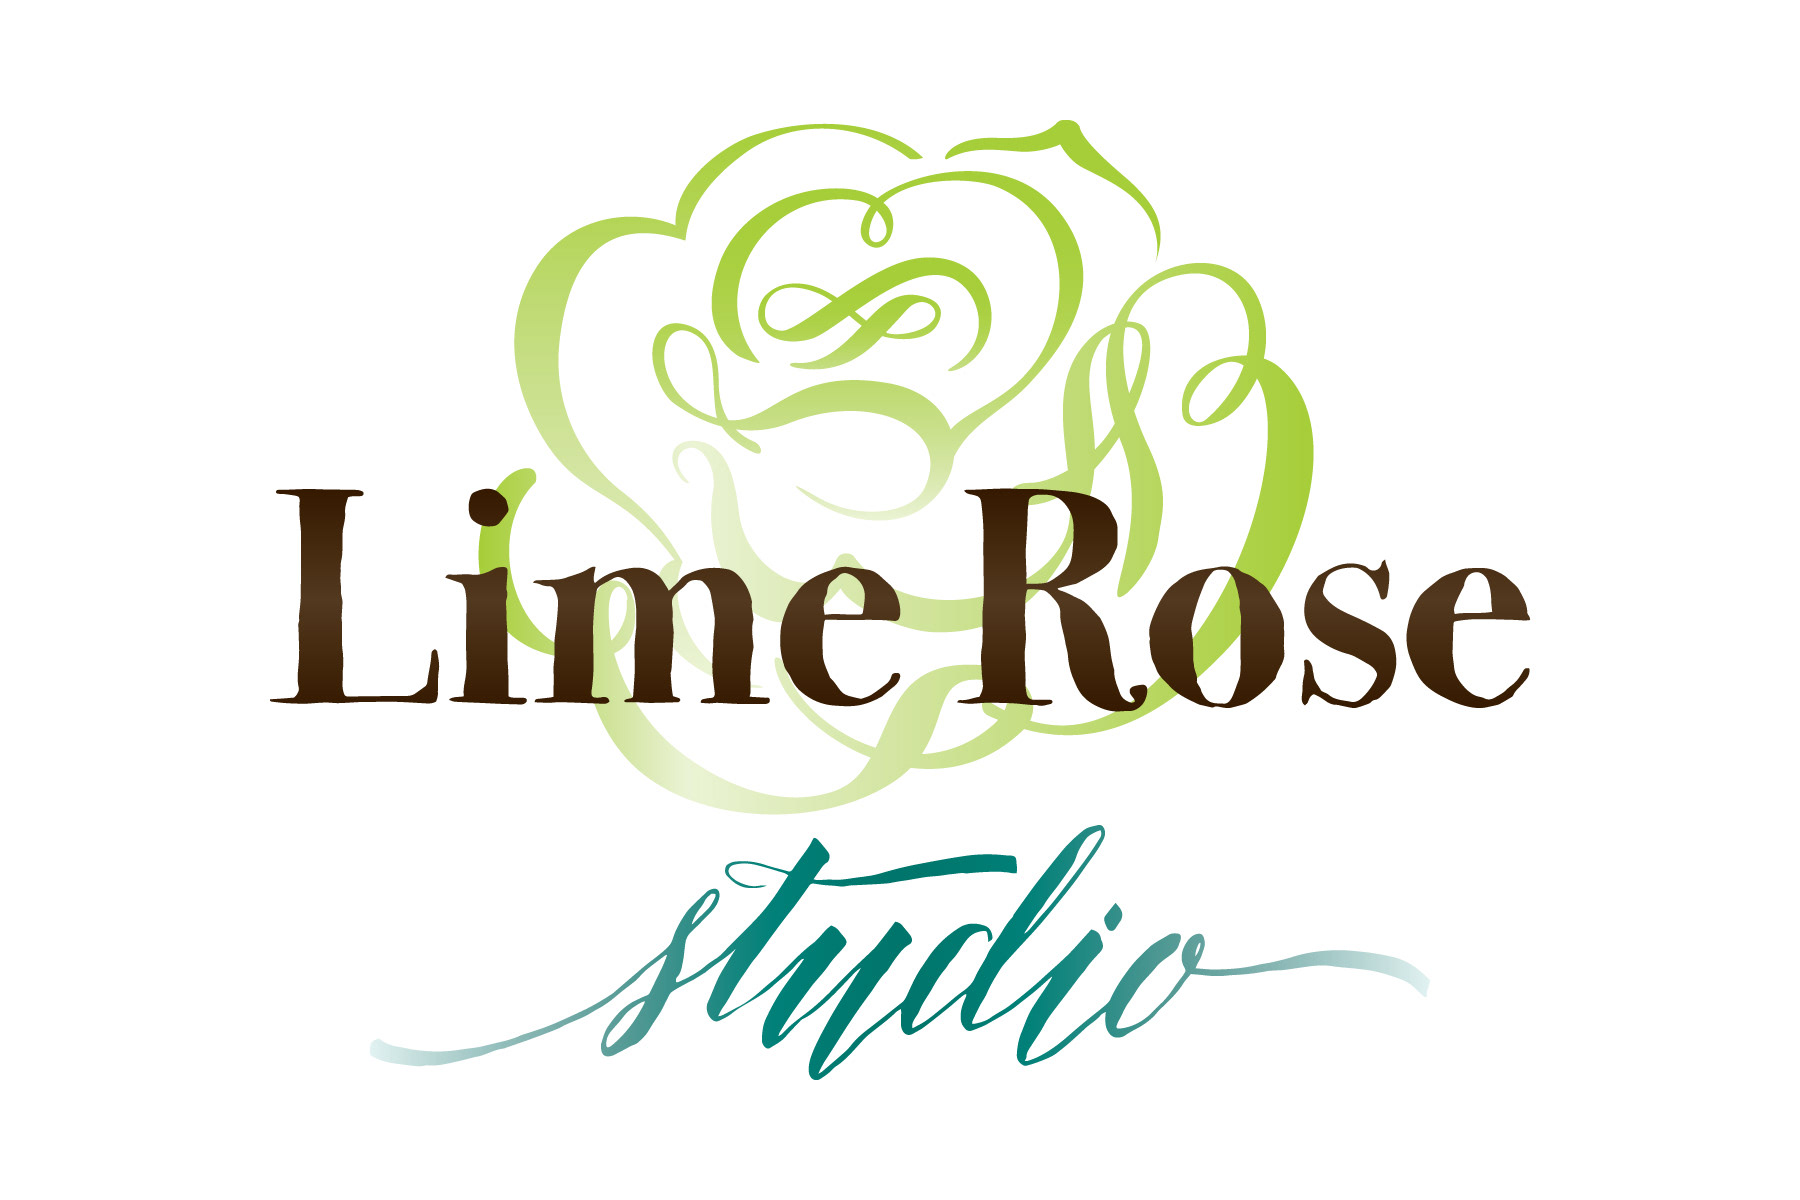 Lime Rose Studio